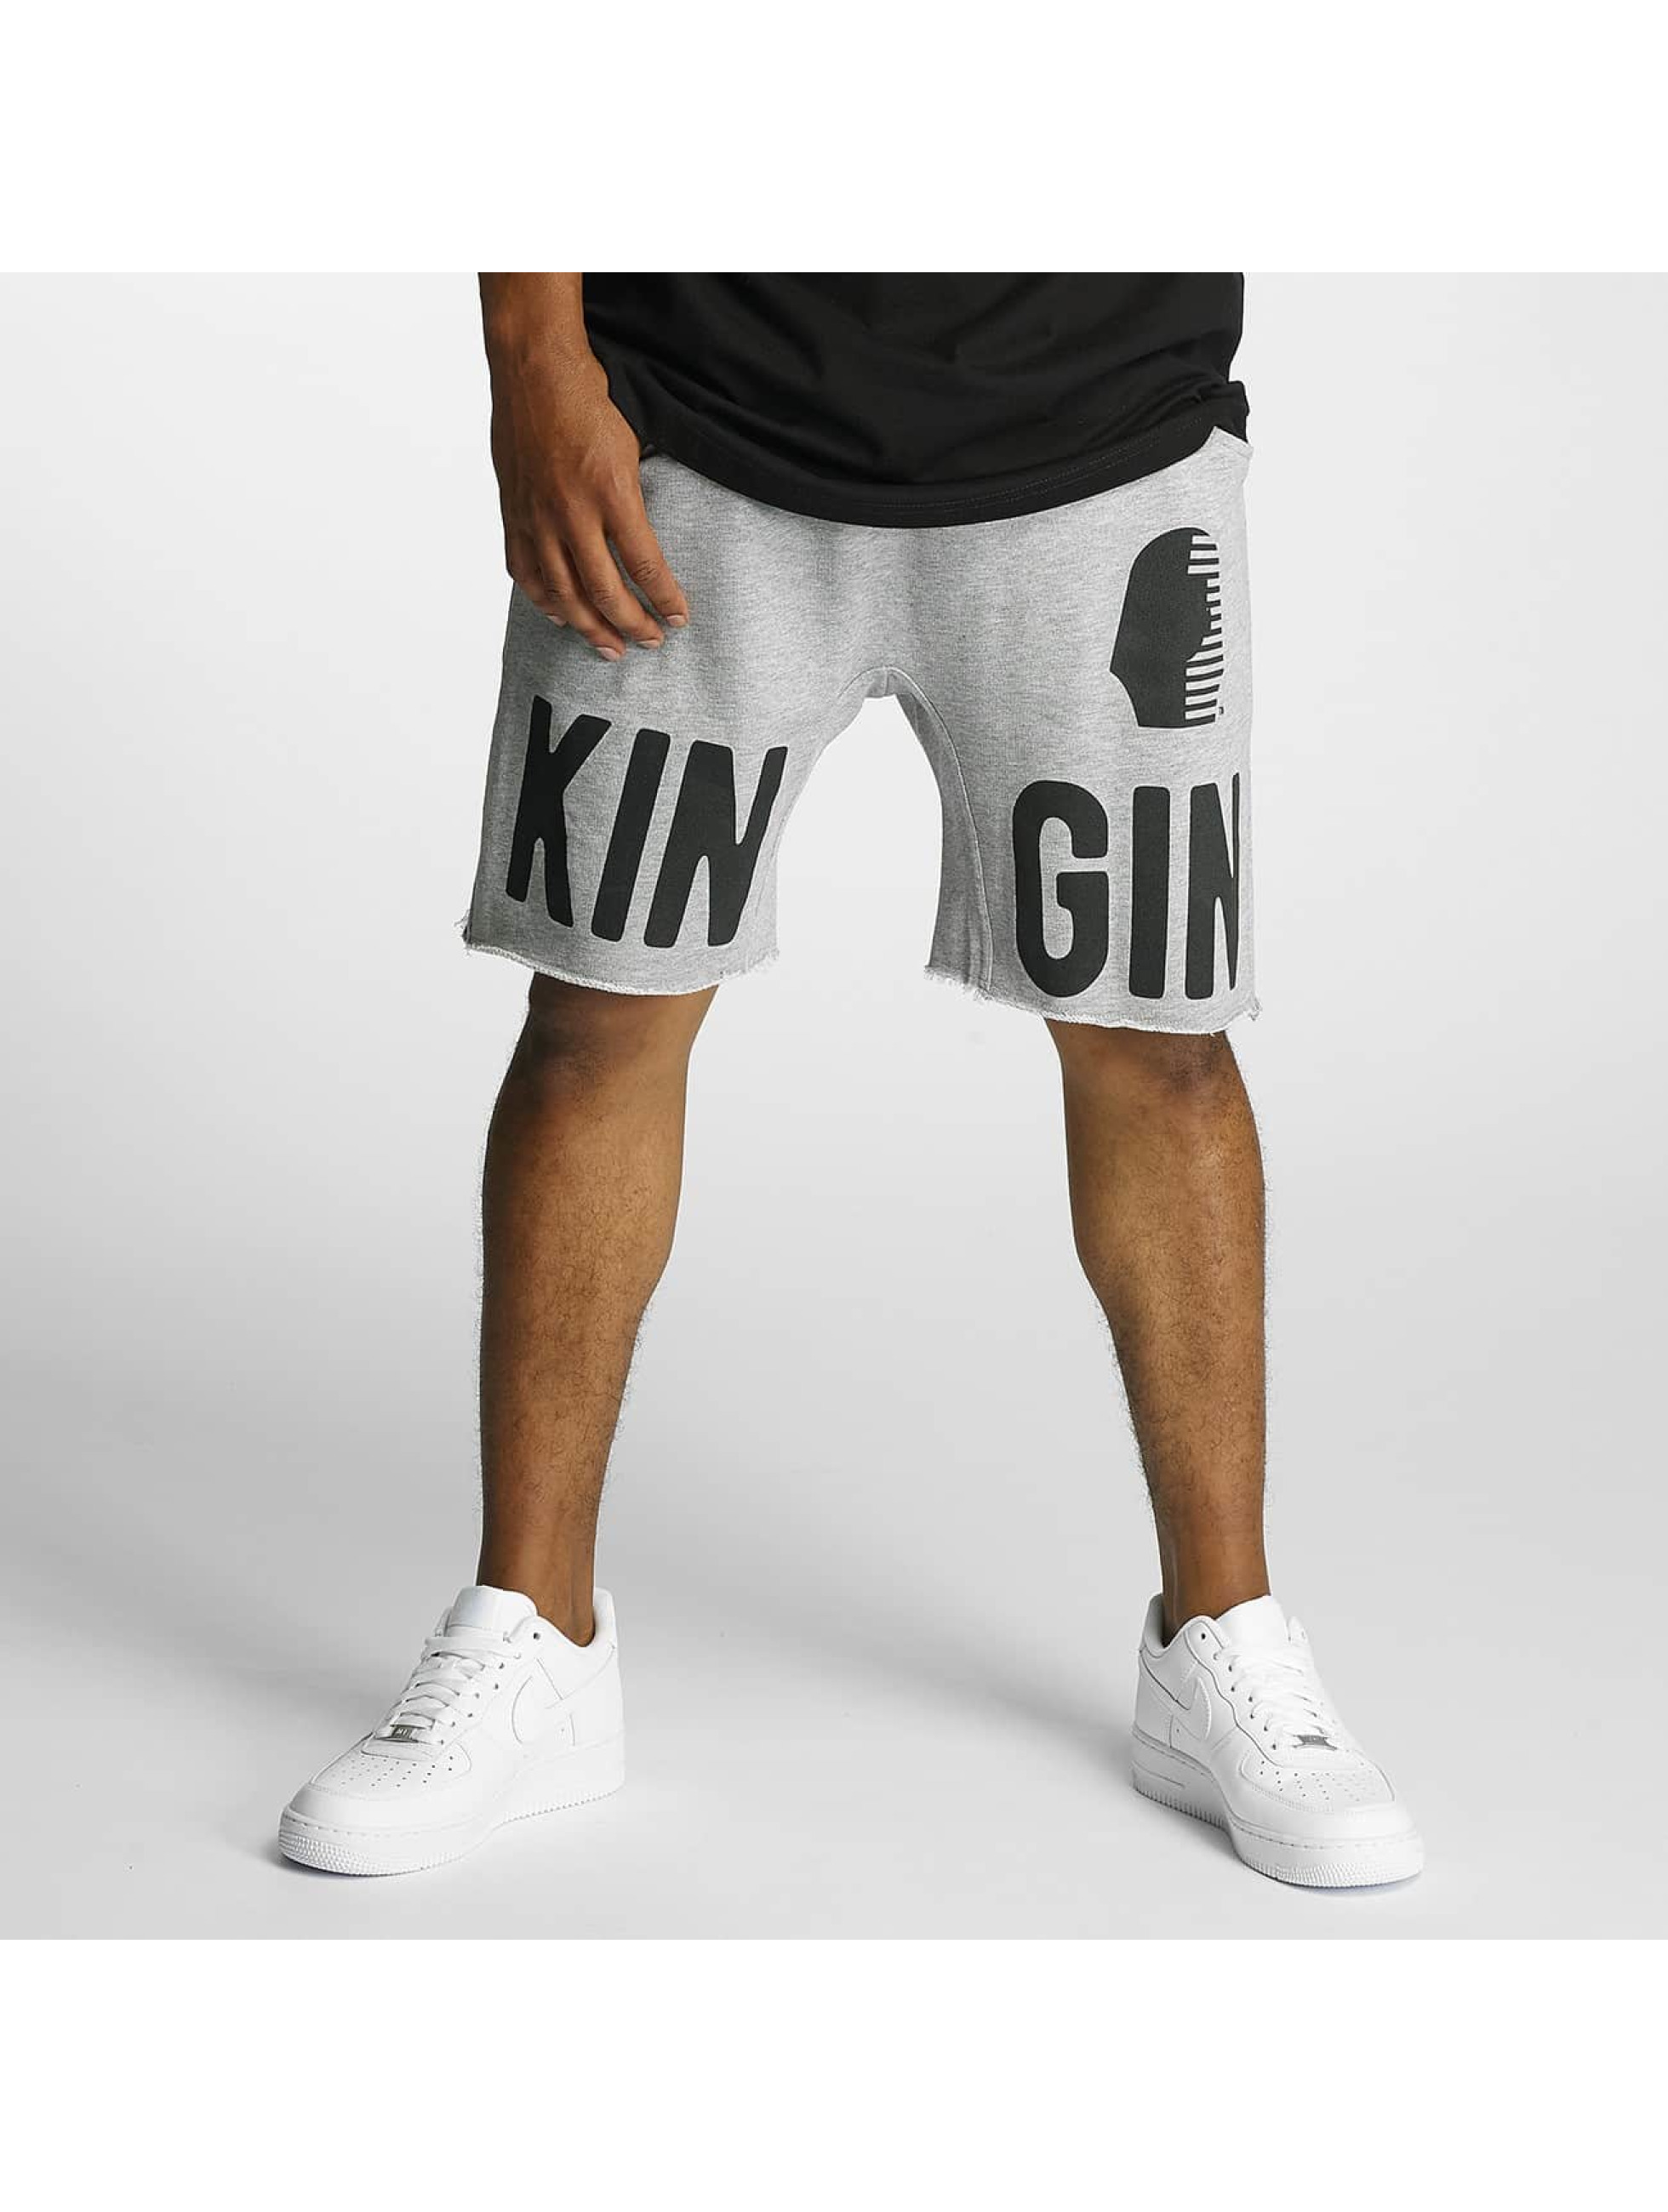 Kingin Pantalon / Shorts Anubis en gris